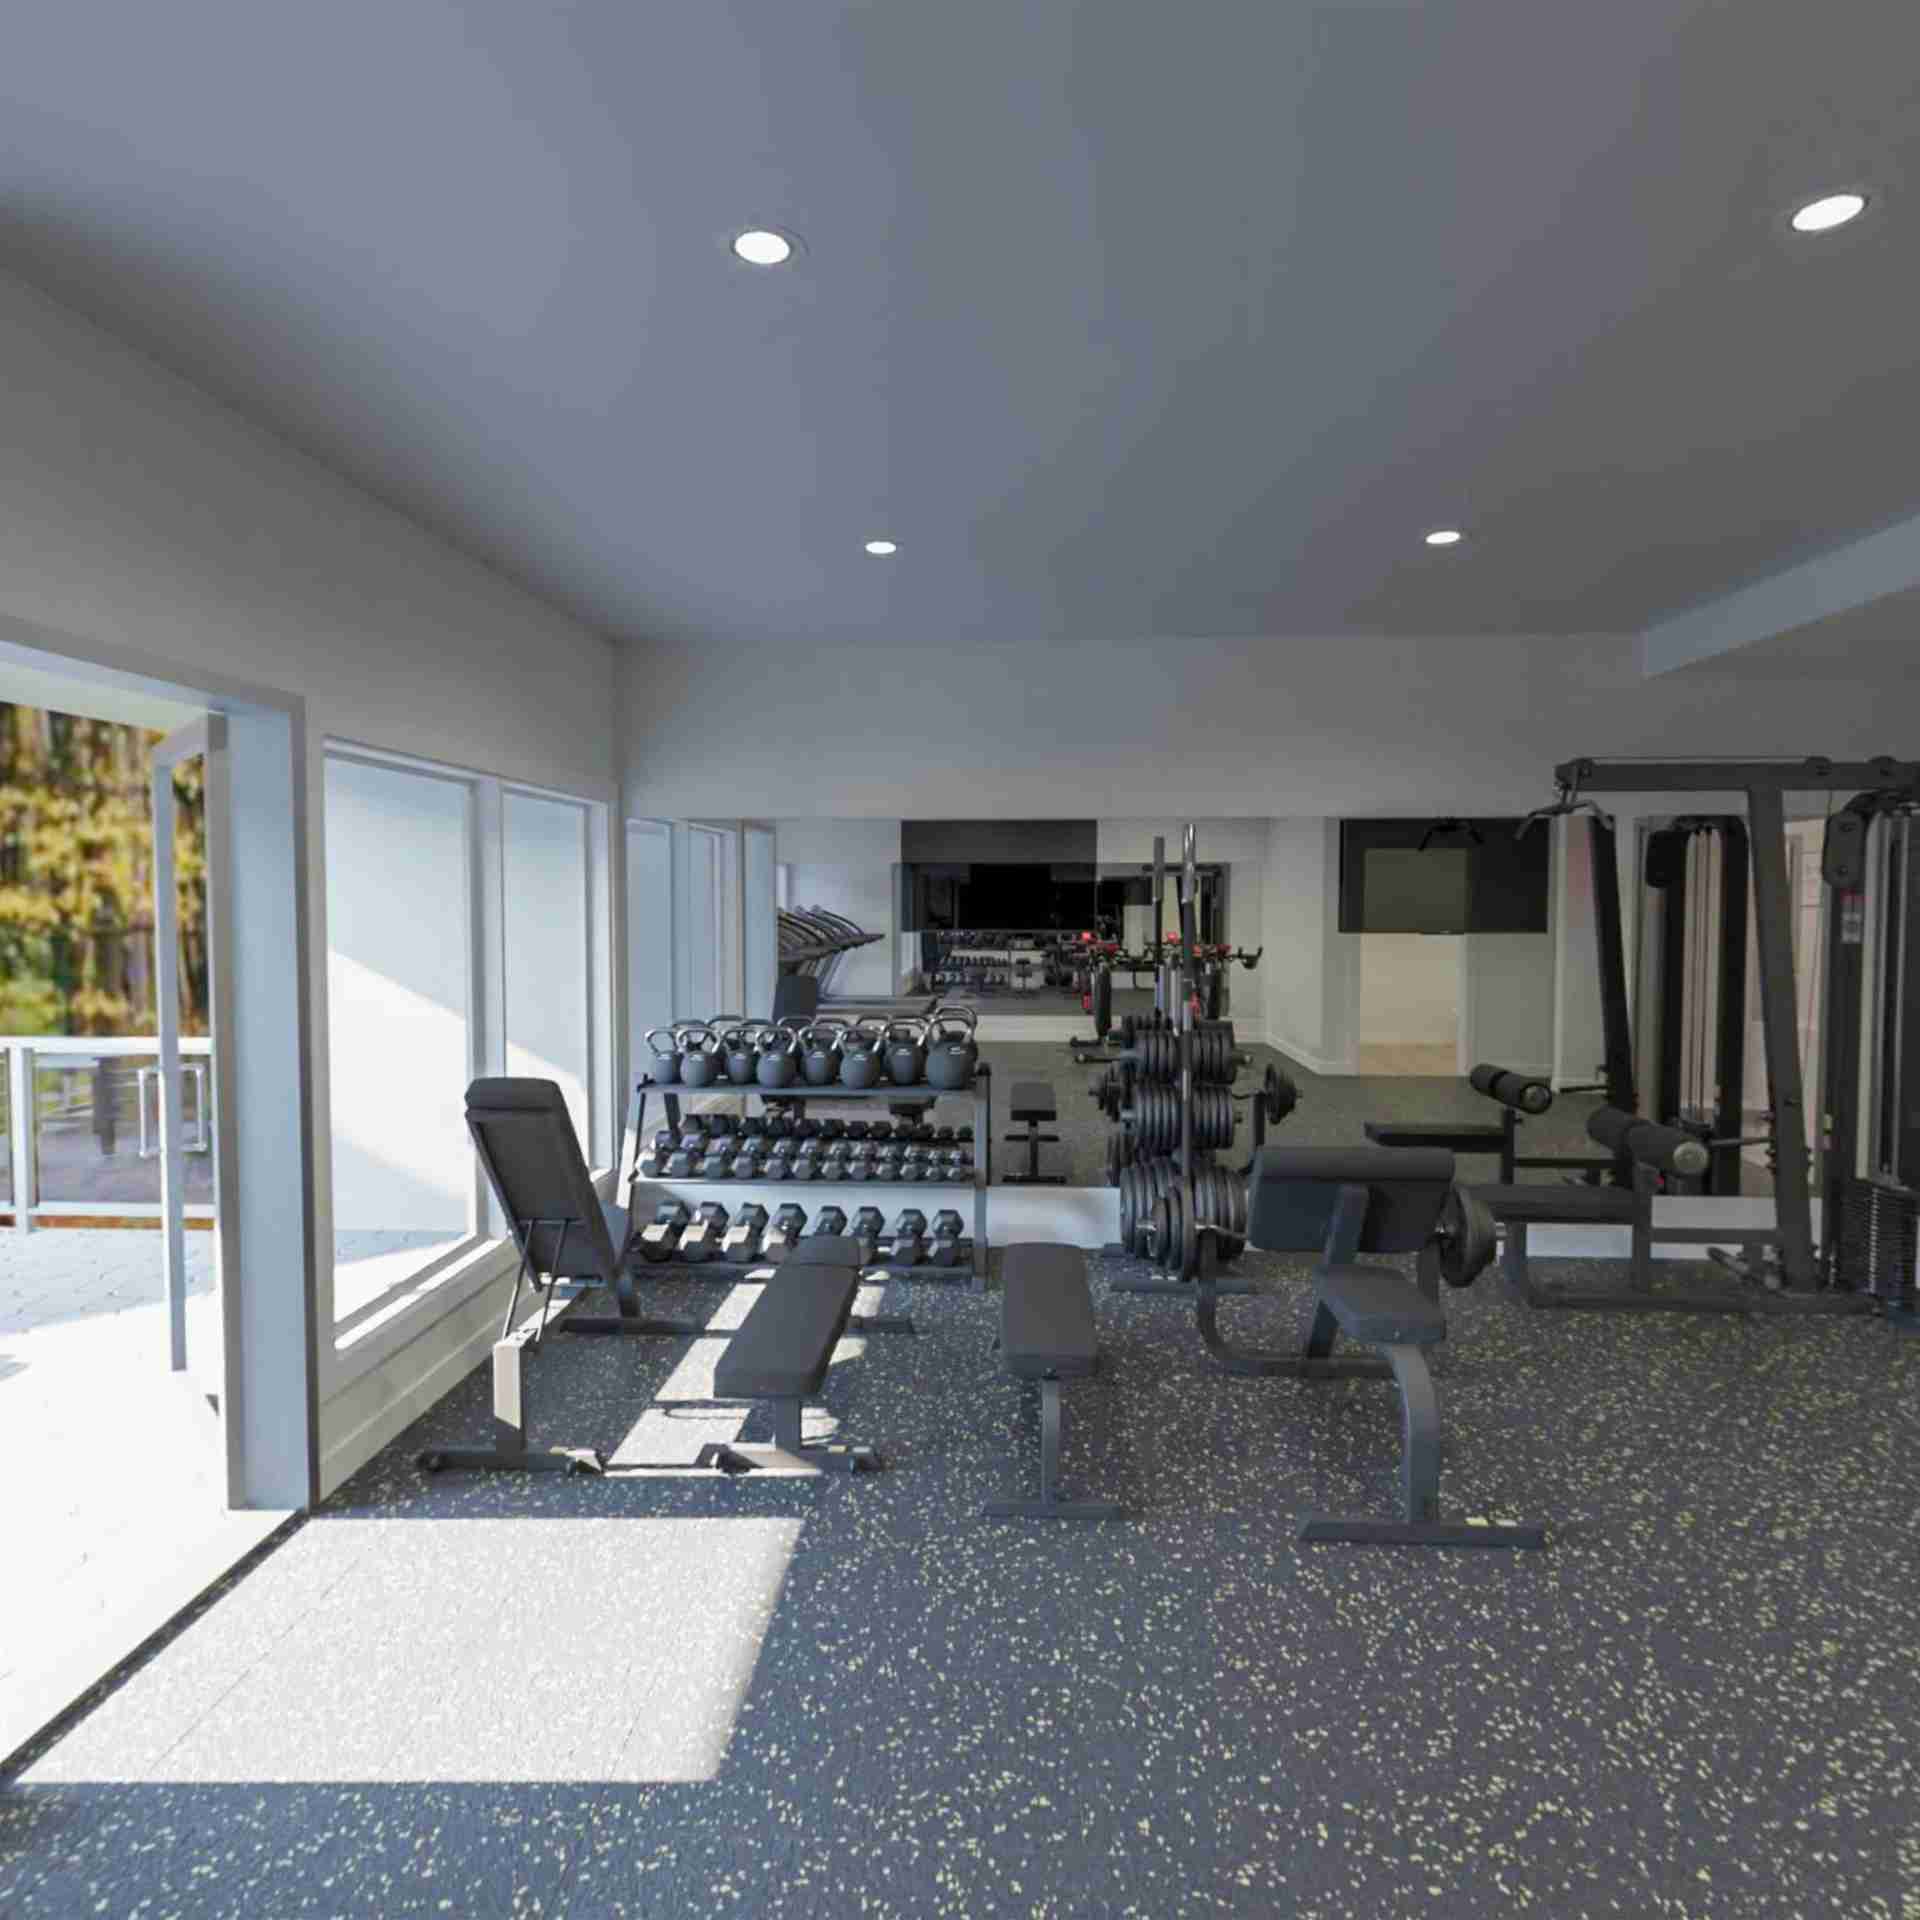 Gallery - rendering-interior-gym-weights